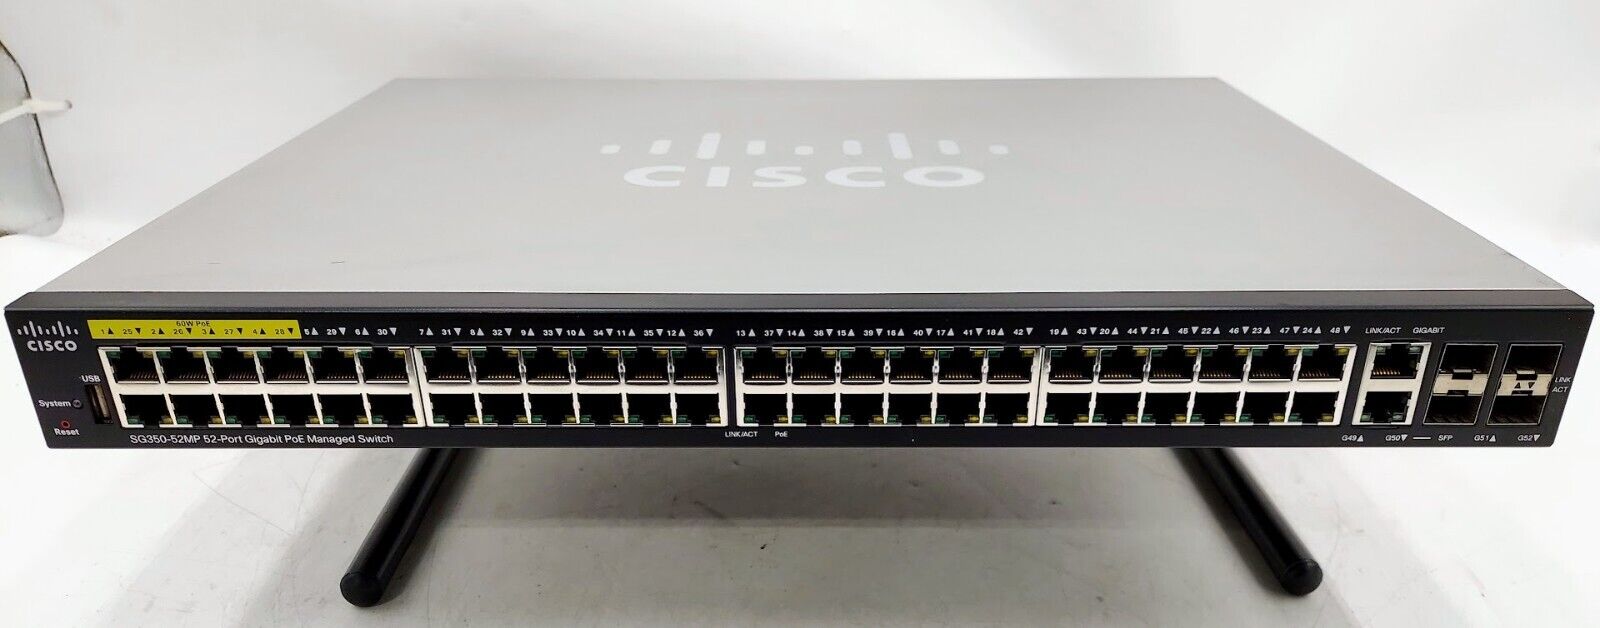 Cisco SG350-52MP 52-Port Gigabit PoE Managed Switch